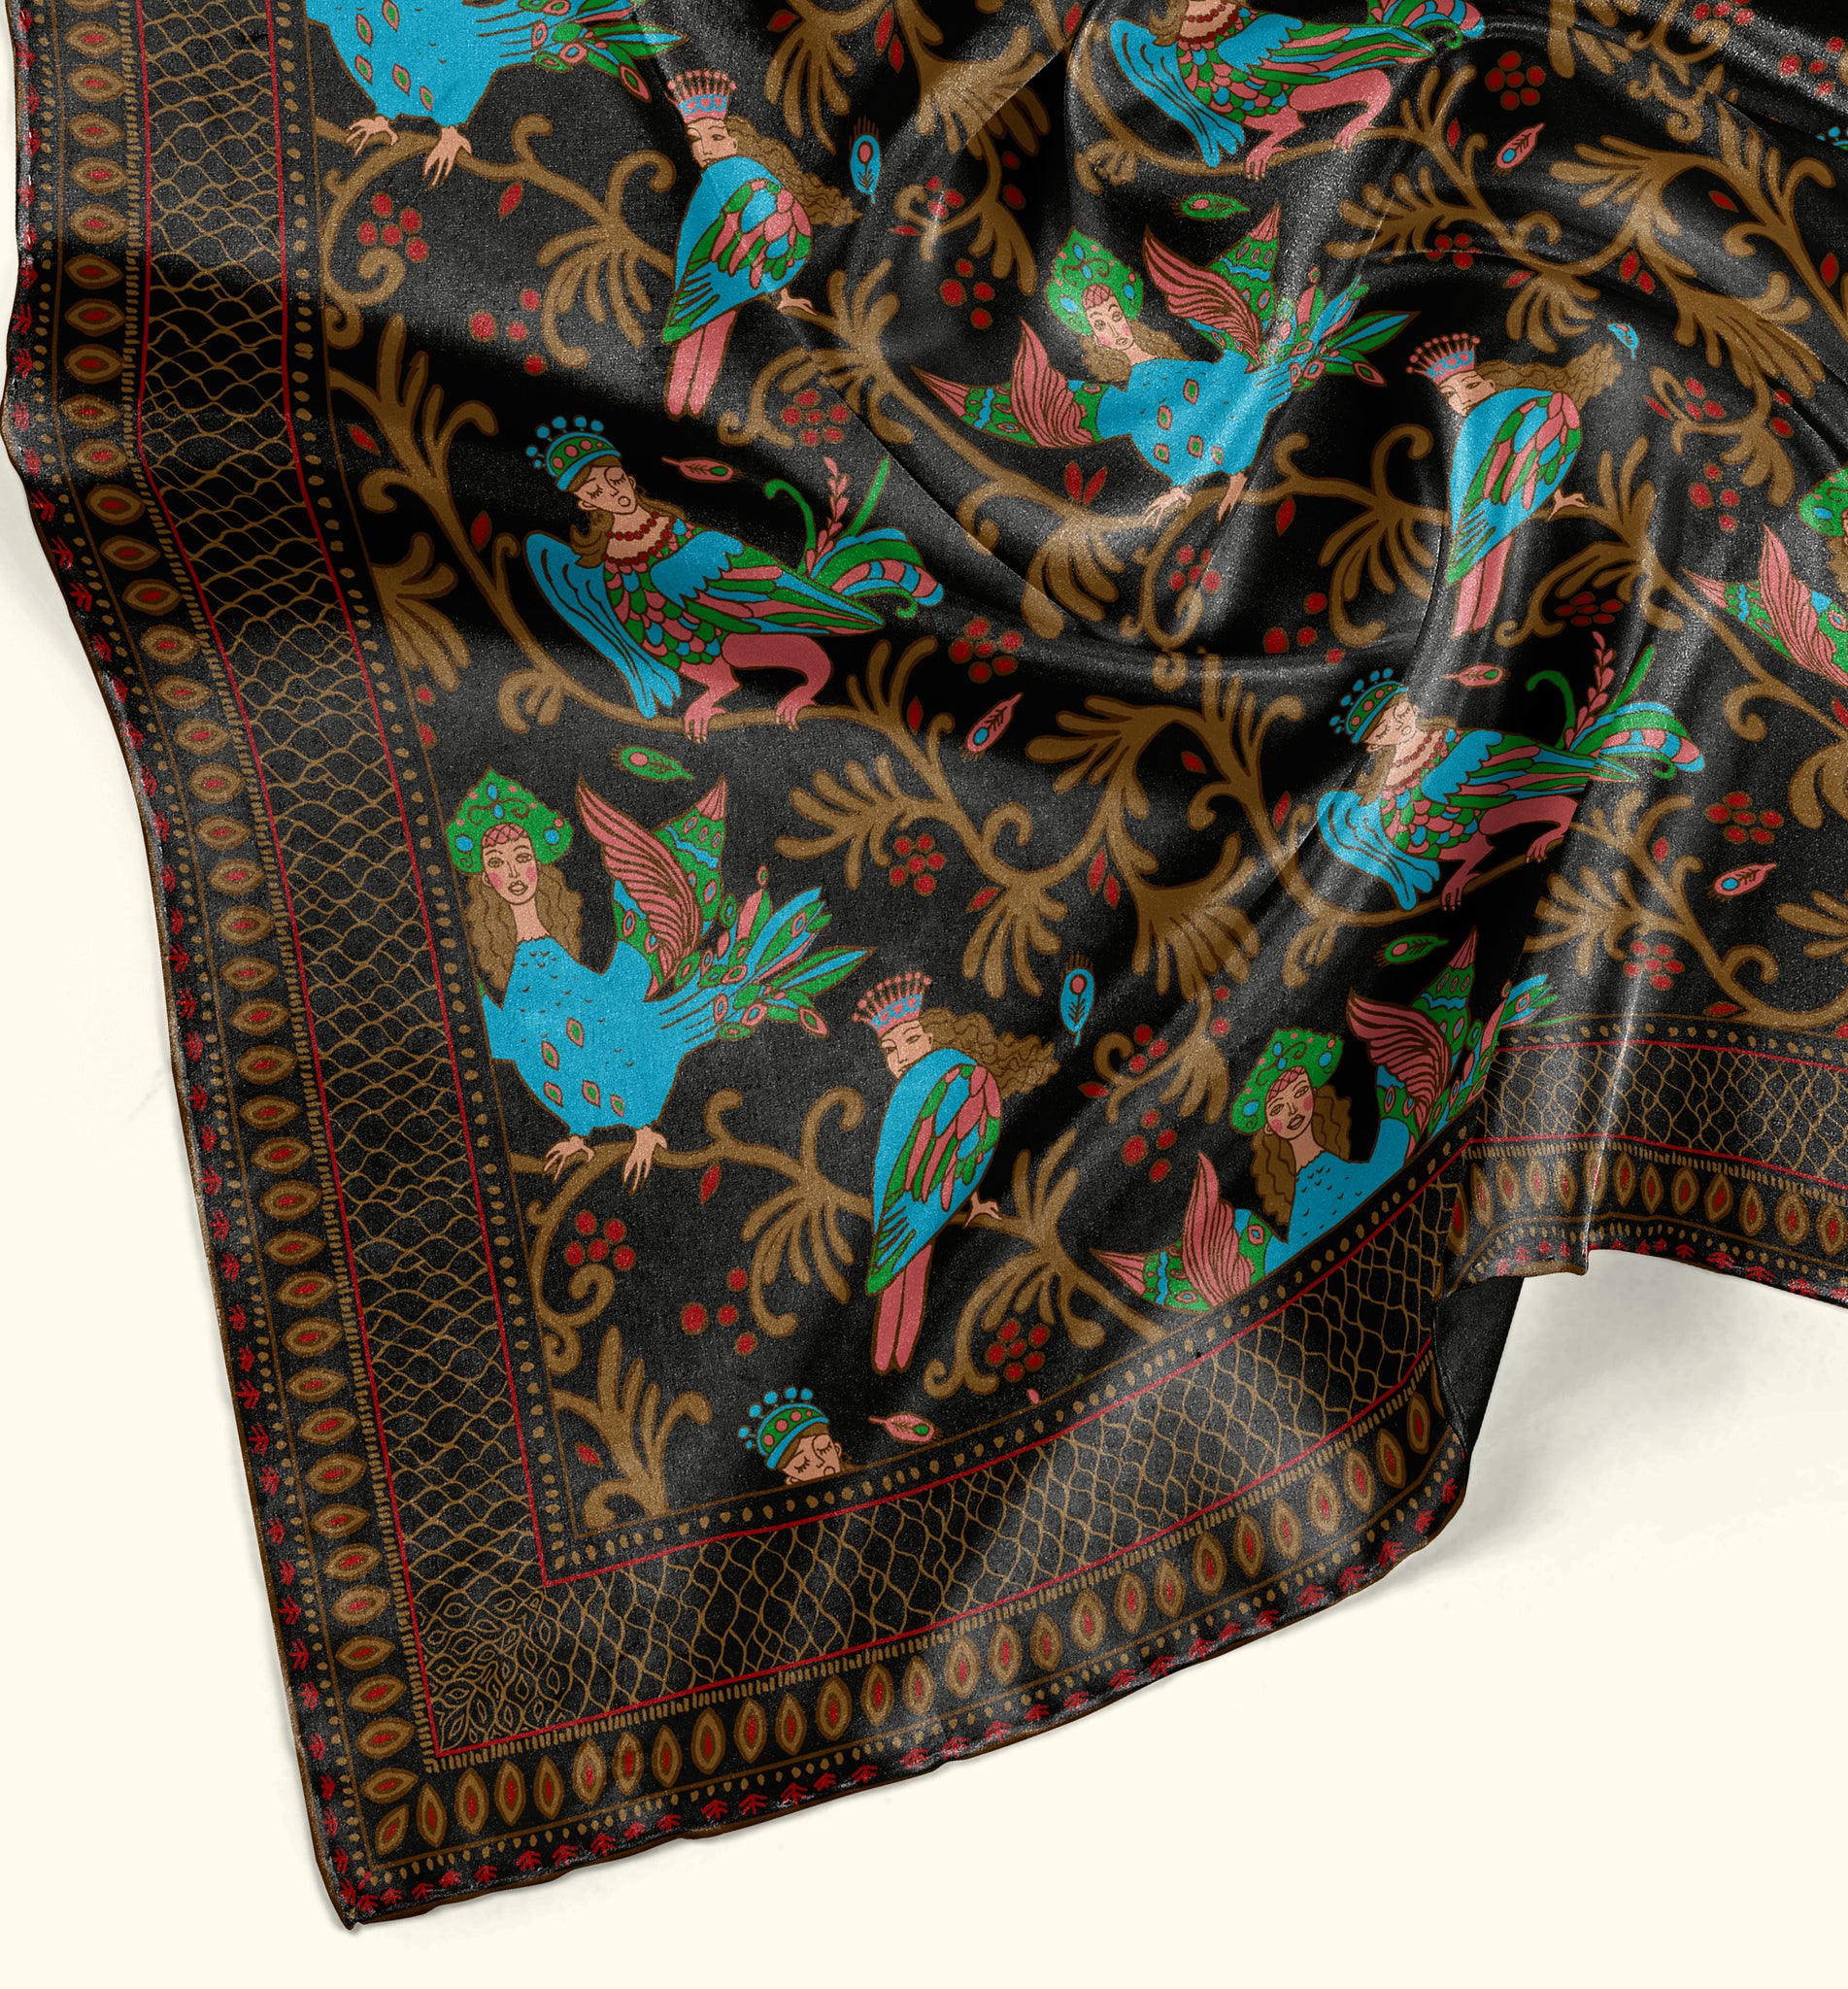 Sirin Birds Silk Scarf Available in 2 Sizes - 100% Silk or Vegan Faux Silk - Handmade to Order